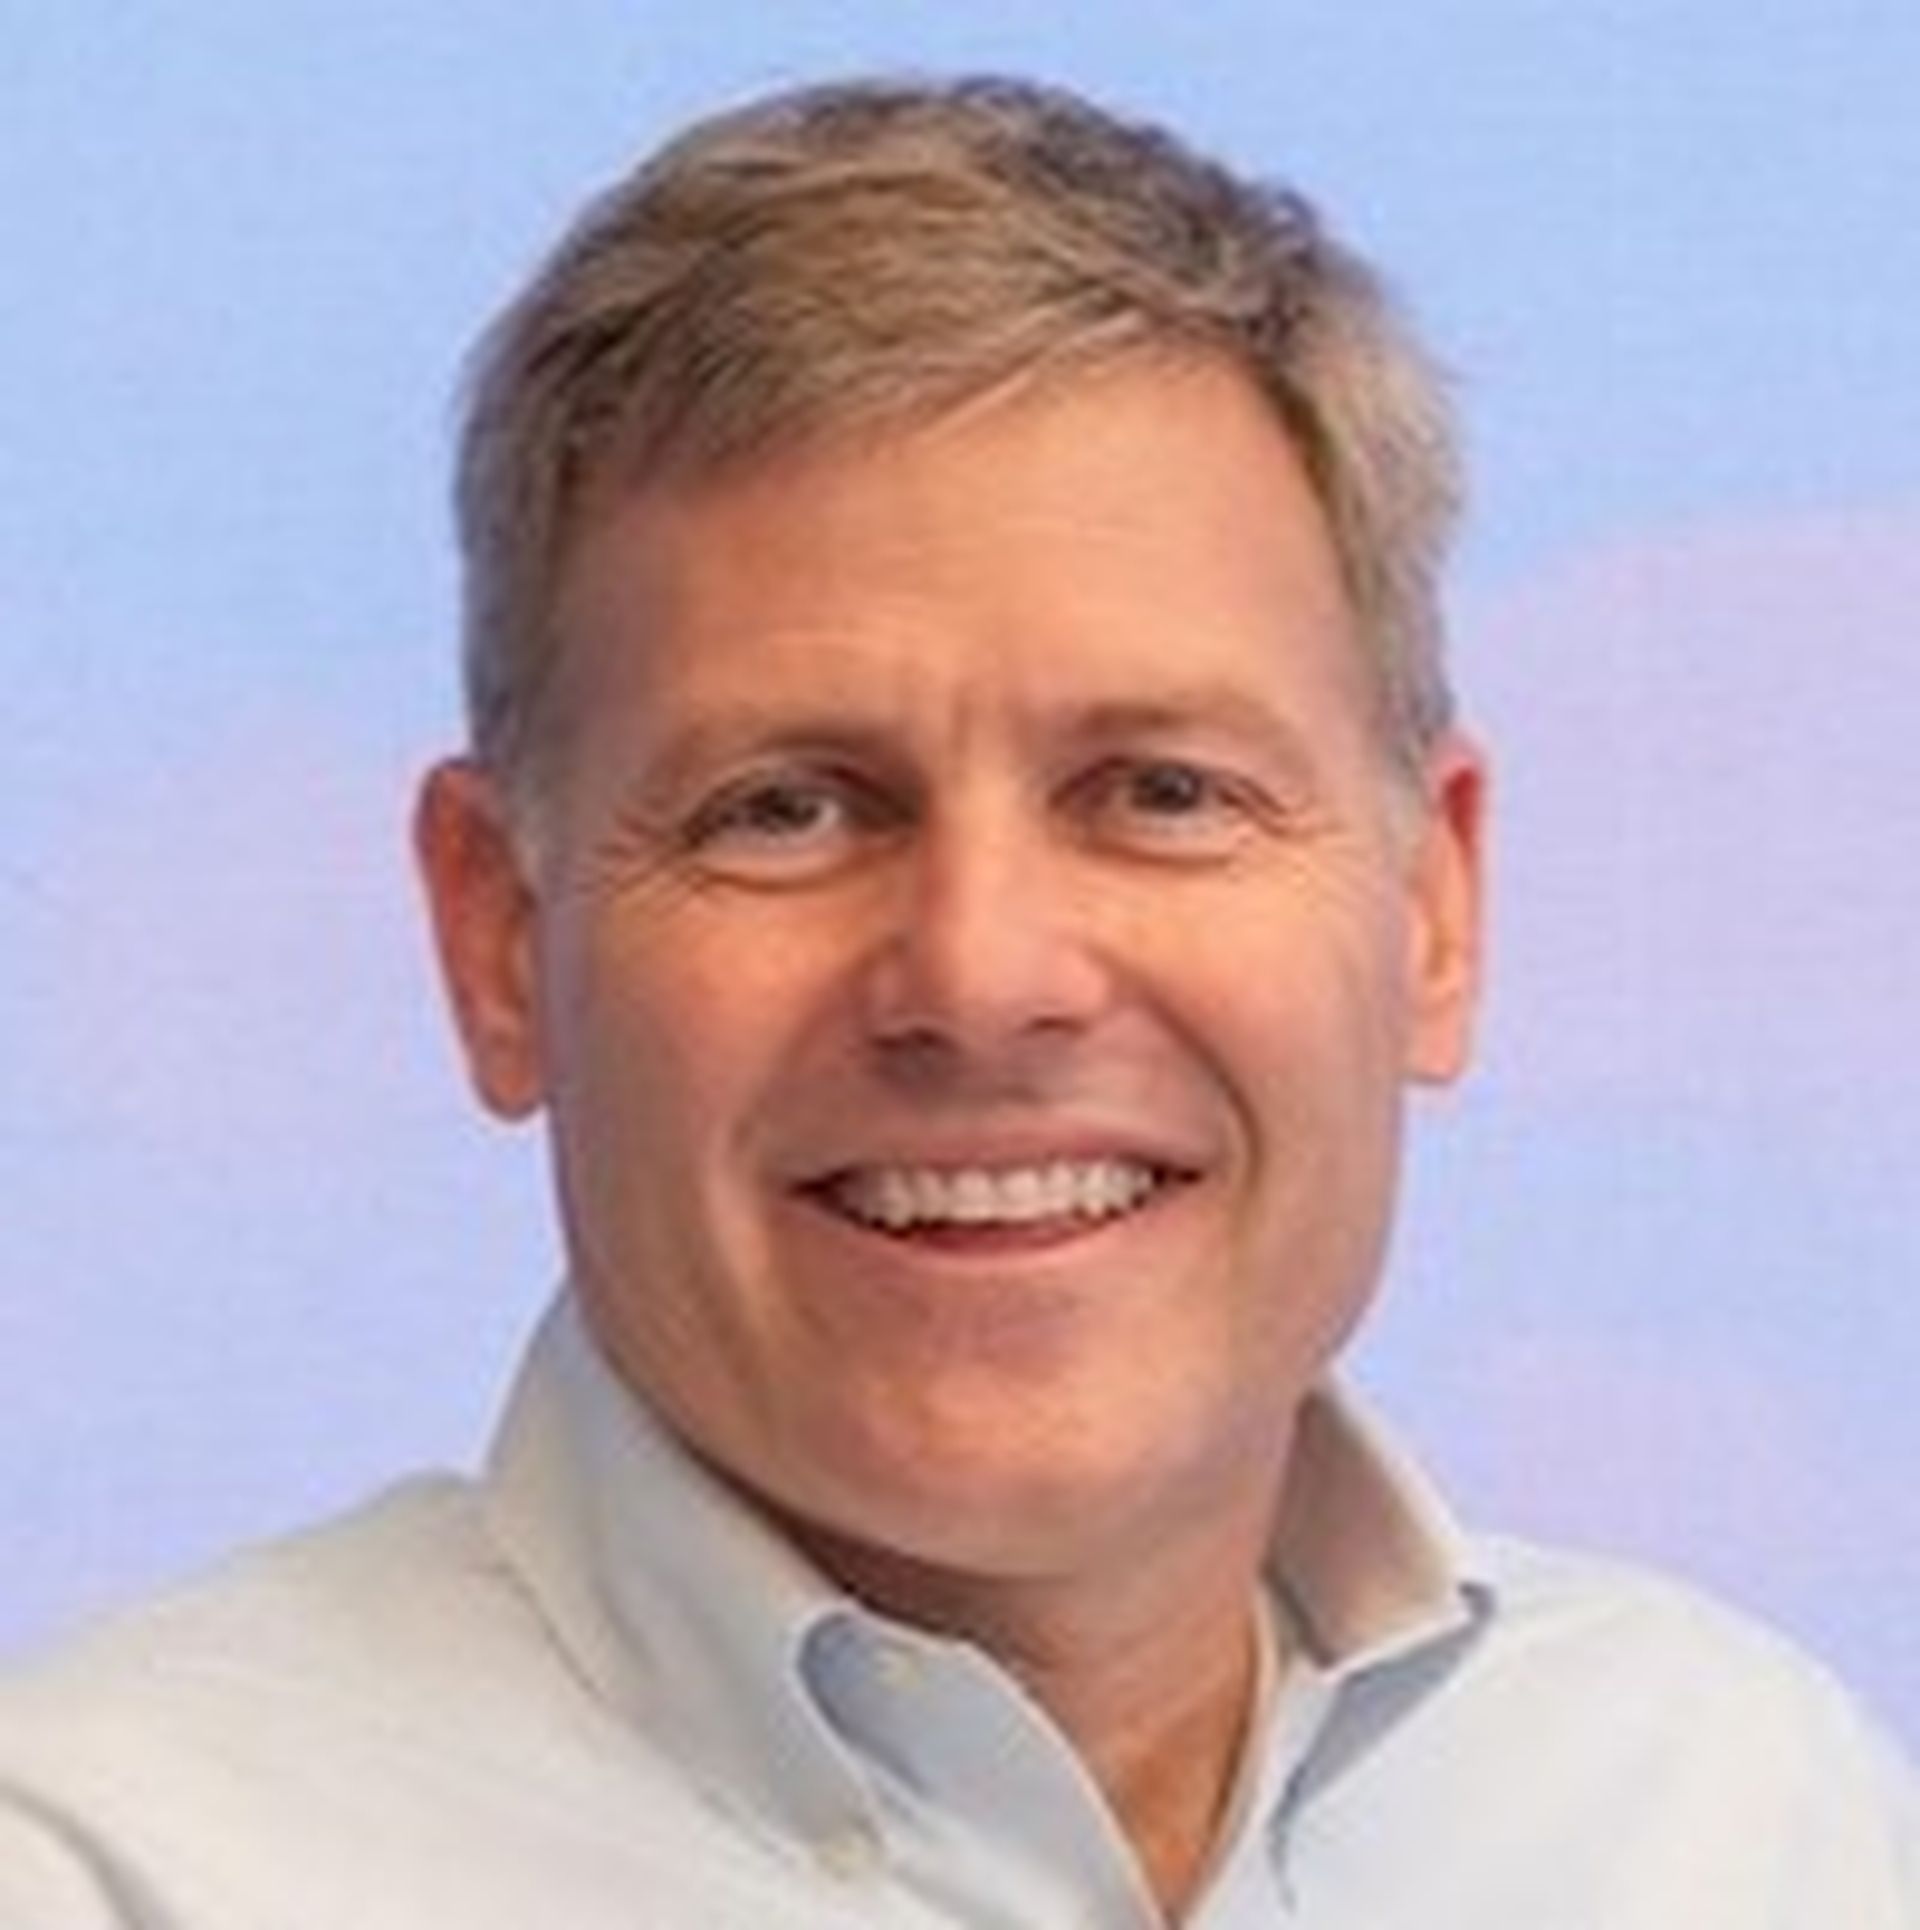 David Wagner, CEO, Zix